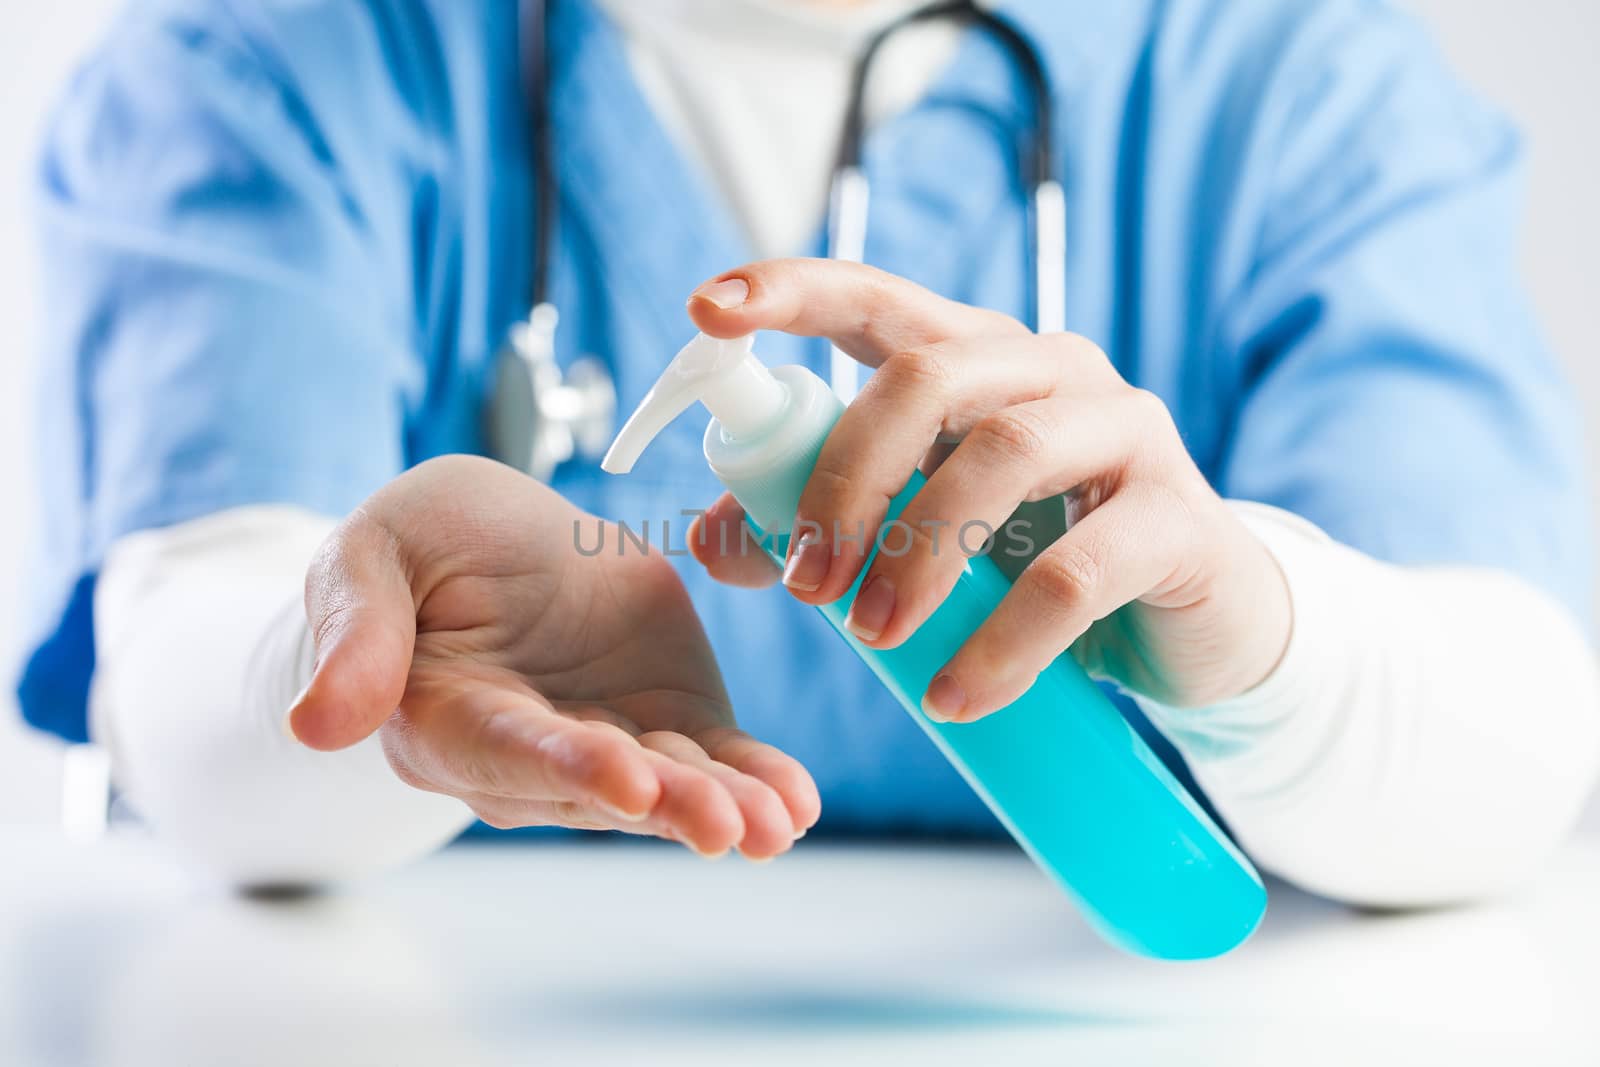 Doctor using hand sanitizer gel by Plyushkin